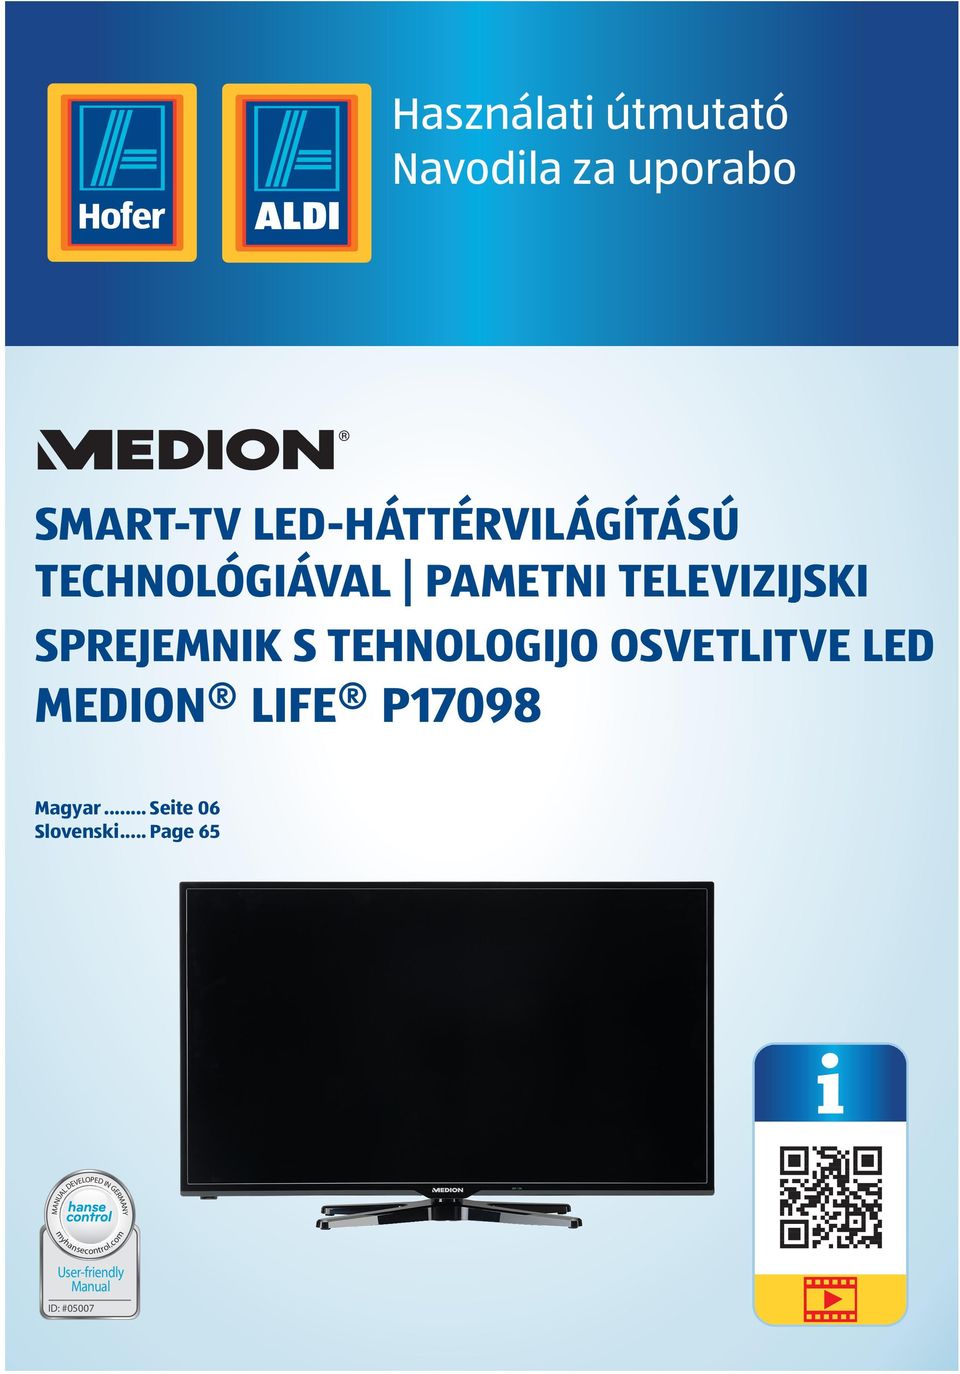 MEDION LIFE P17098 SMART-TV LED-HÁTTÉRVILÁGÍTÁSÚ TECHNOLÓGIÁVAL PAMETNI  TELEVIZIJSKI SPREJEMNIK S TEHNOLOGIJO OSVETLITVE LED - PDF Free Download